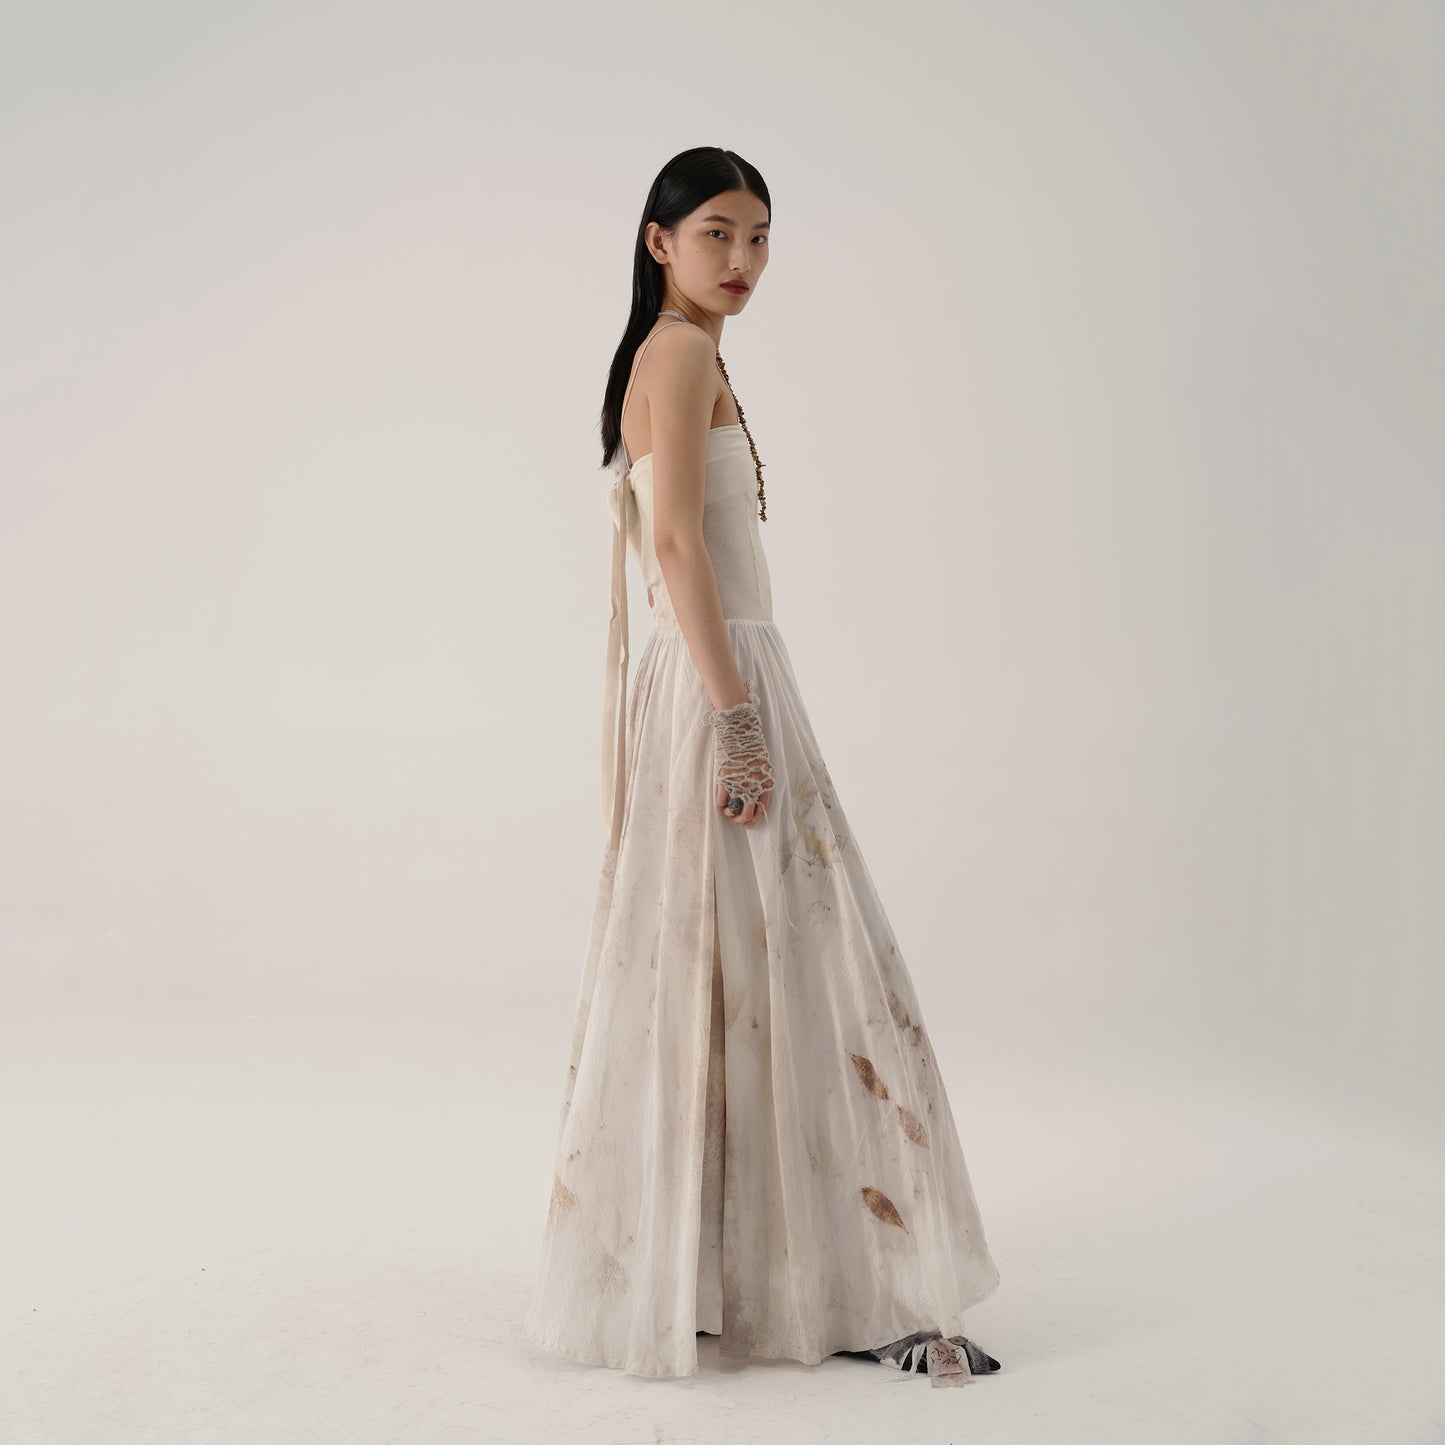 JIBAI - Strapless Dress